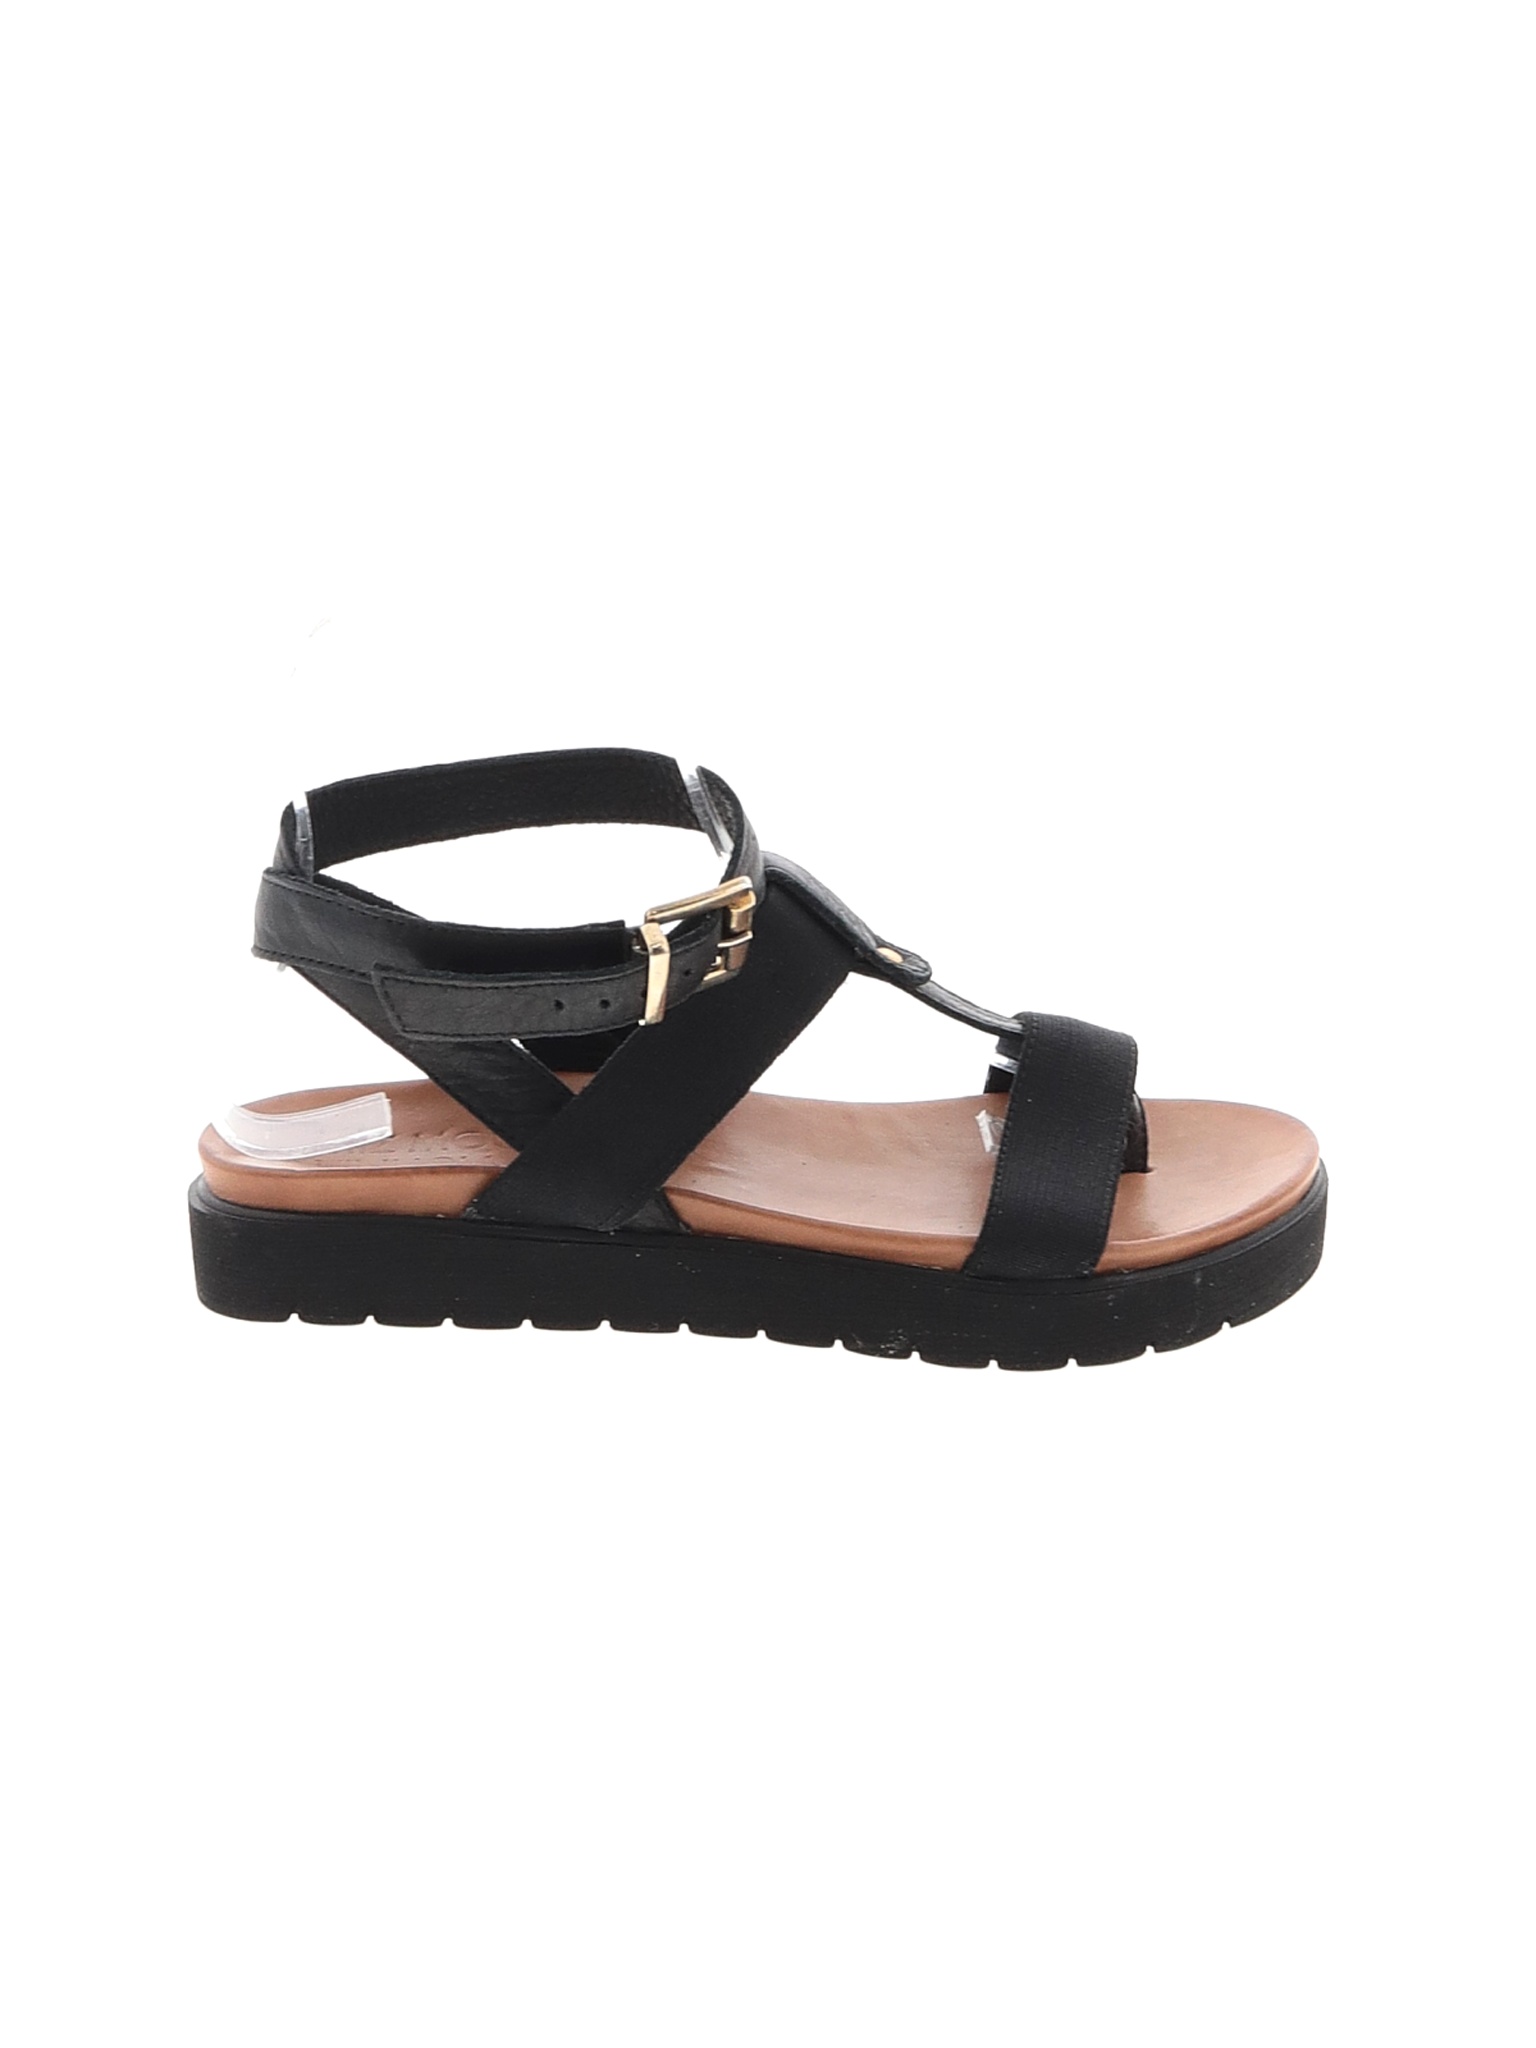 Assorted Brands Women Black Sandals EUR 36 | eBay